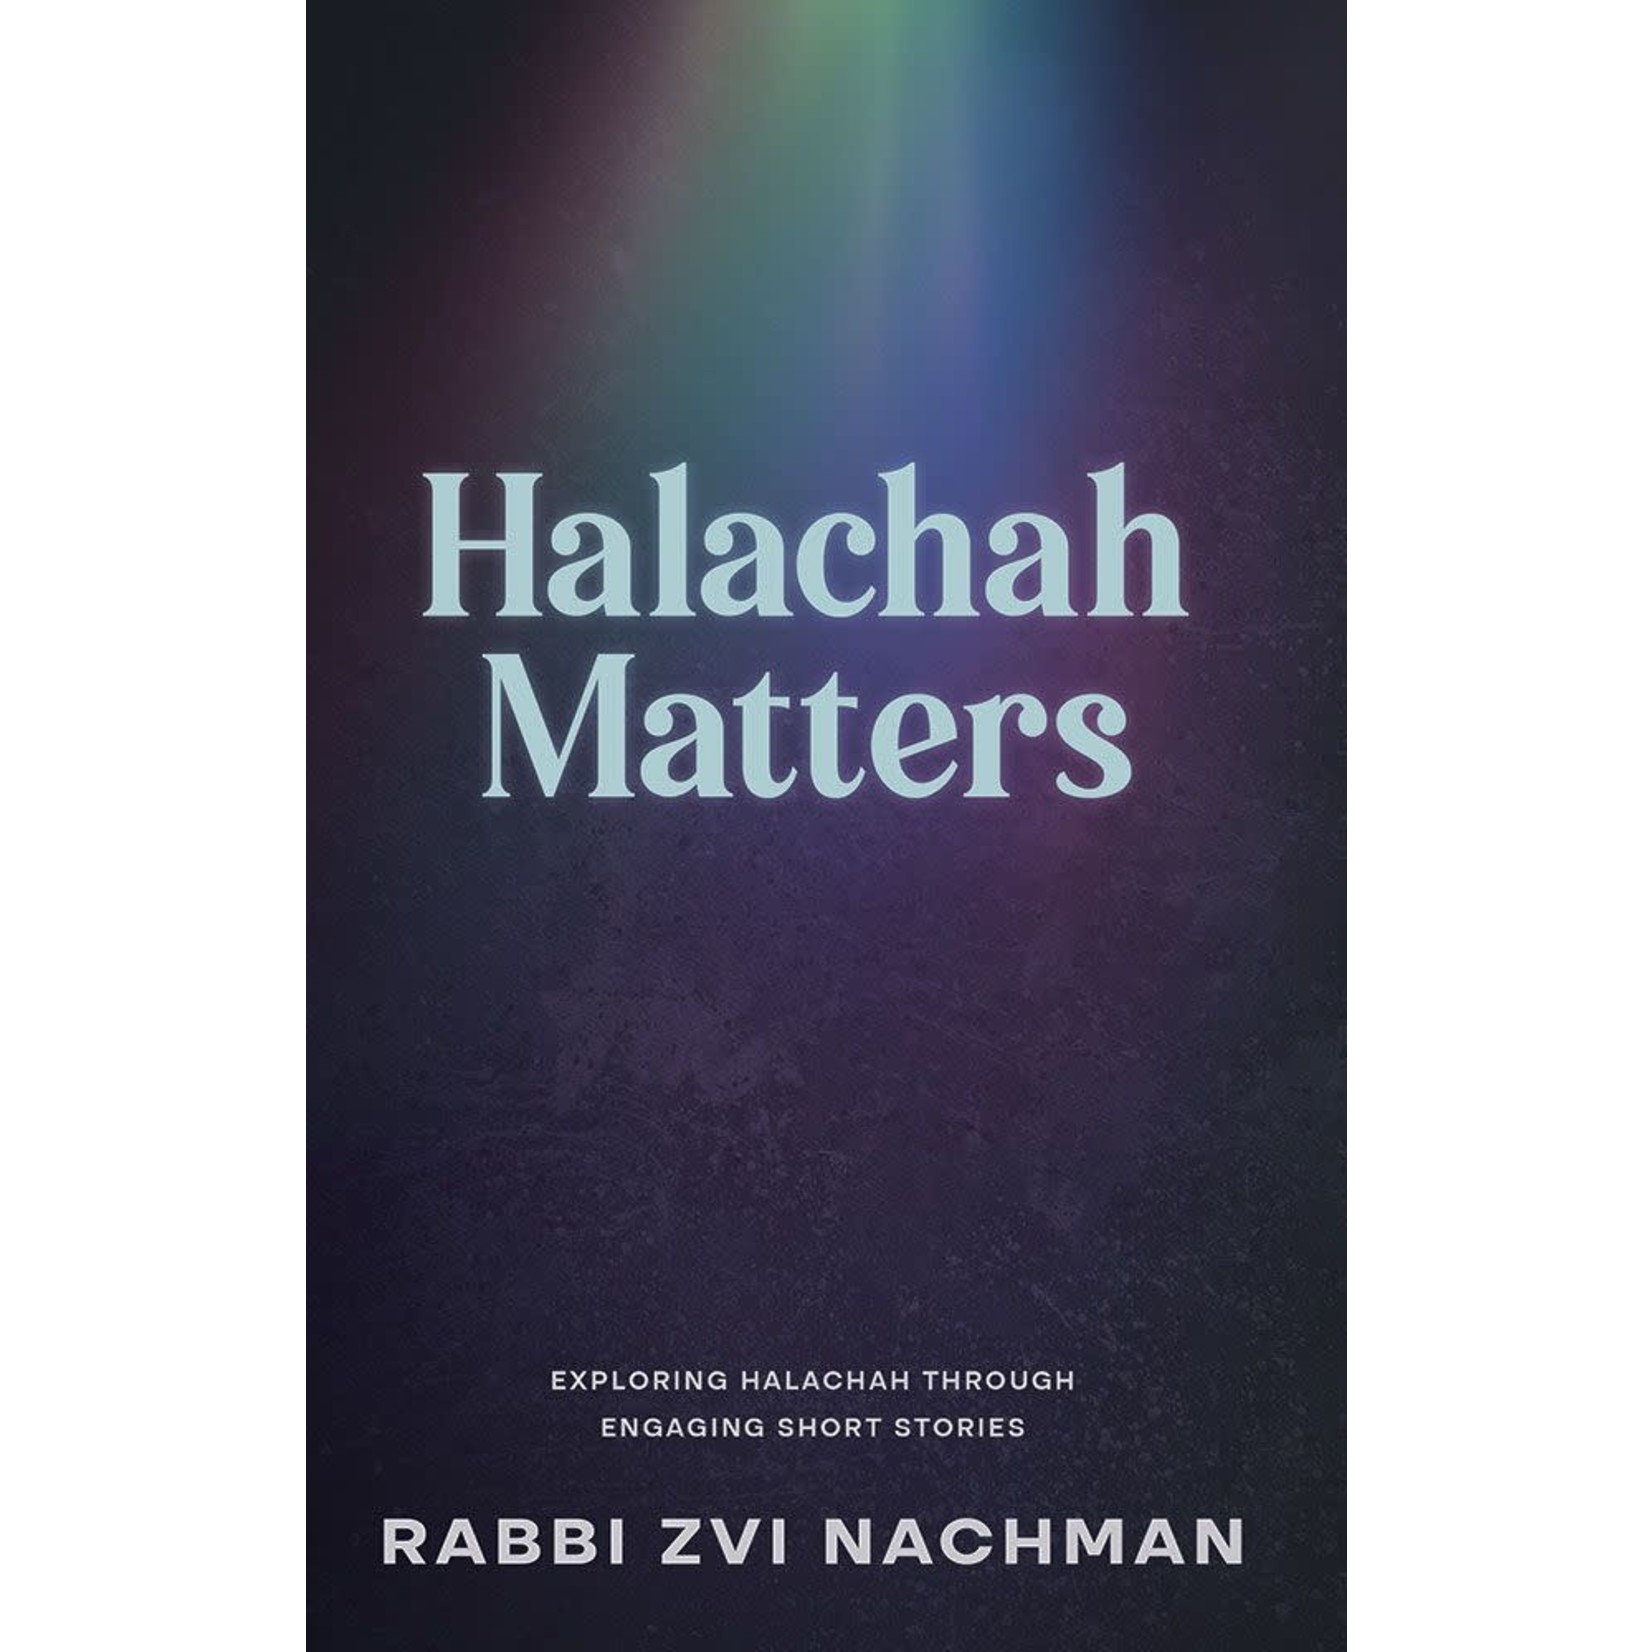 Halachah Matters